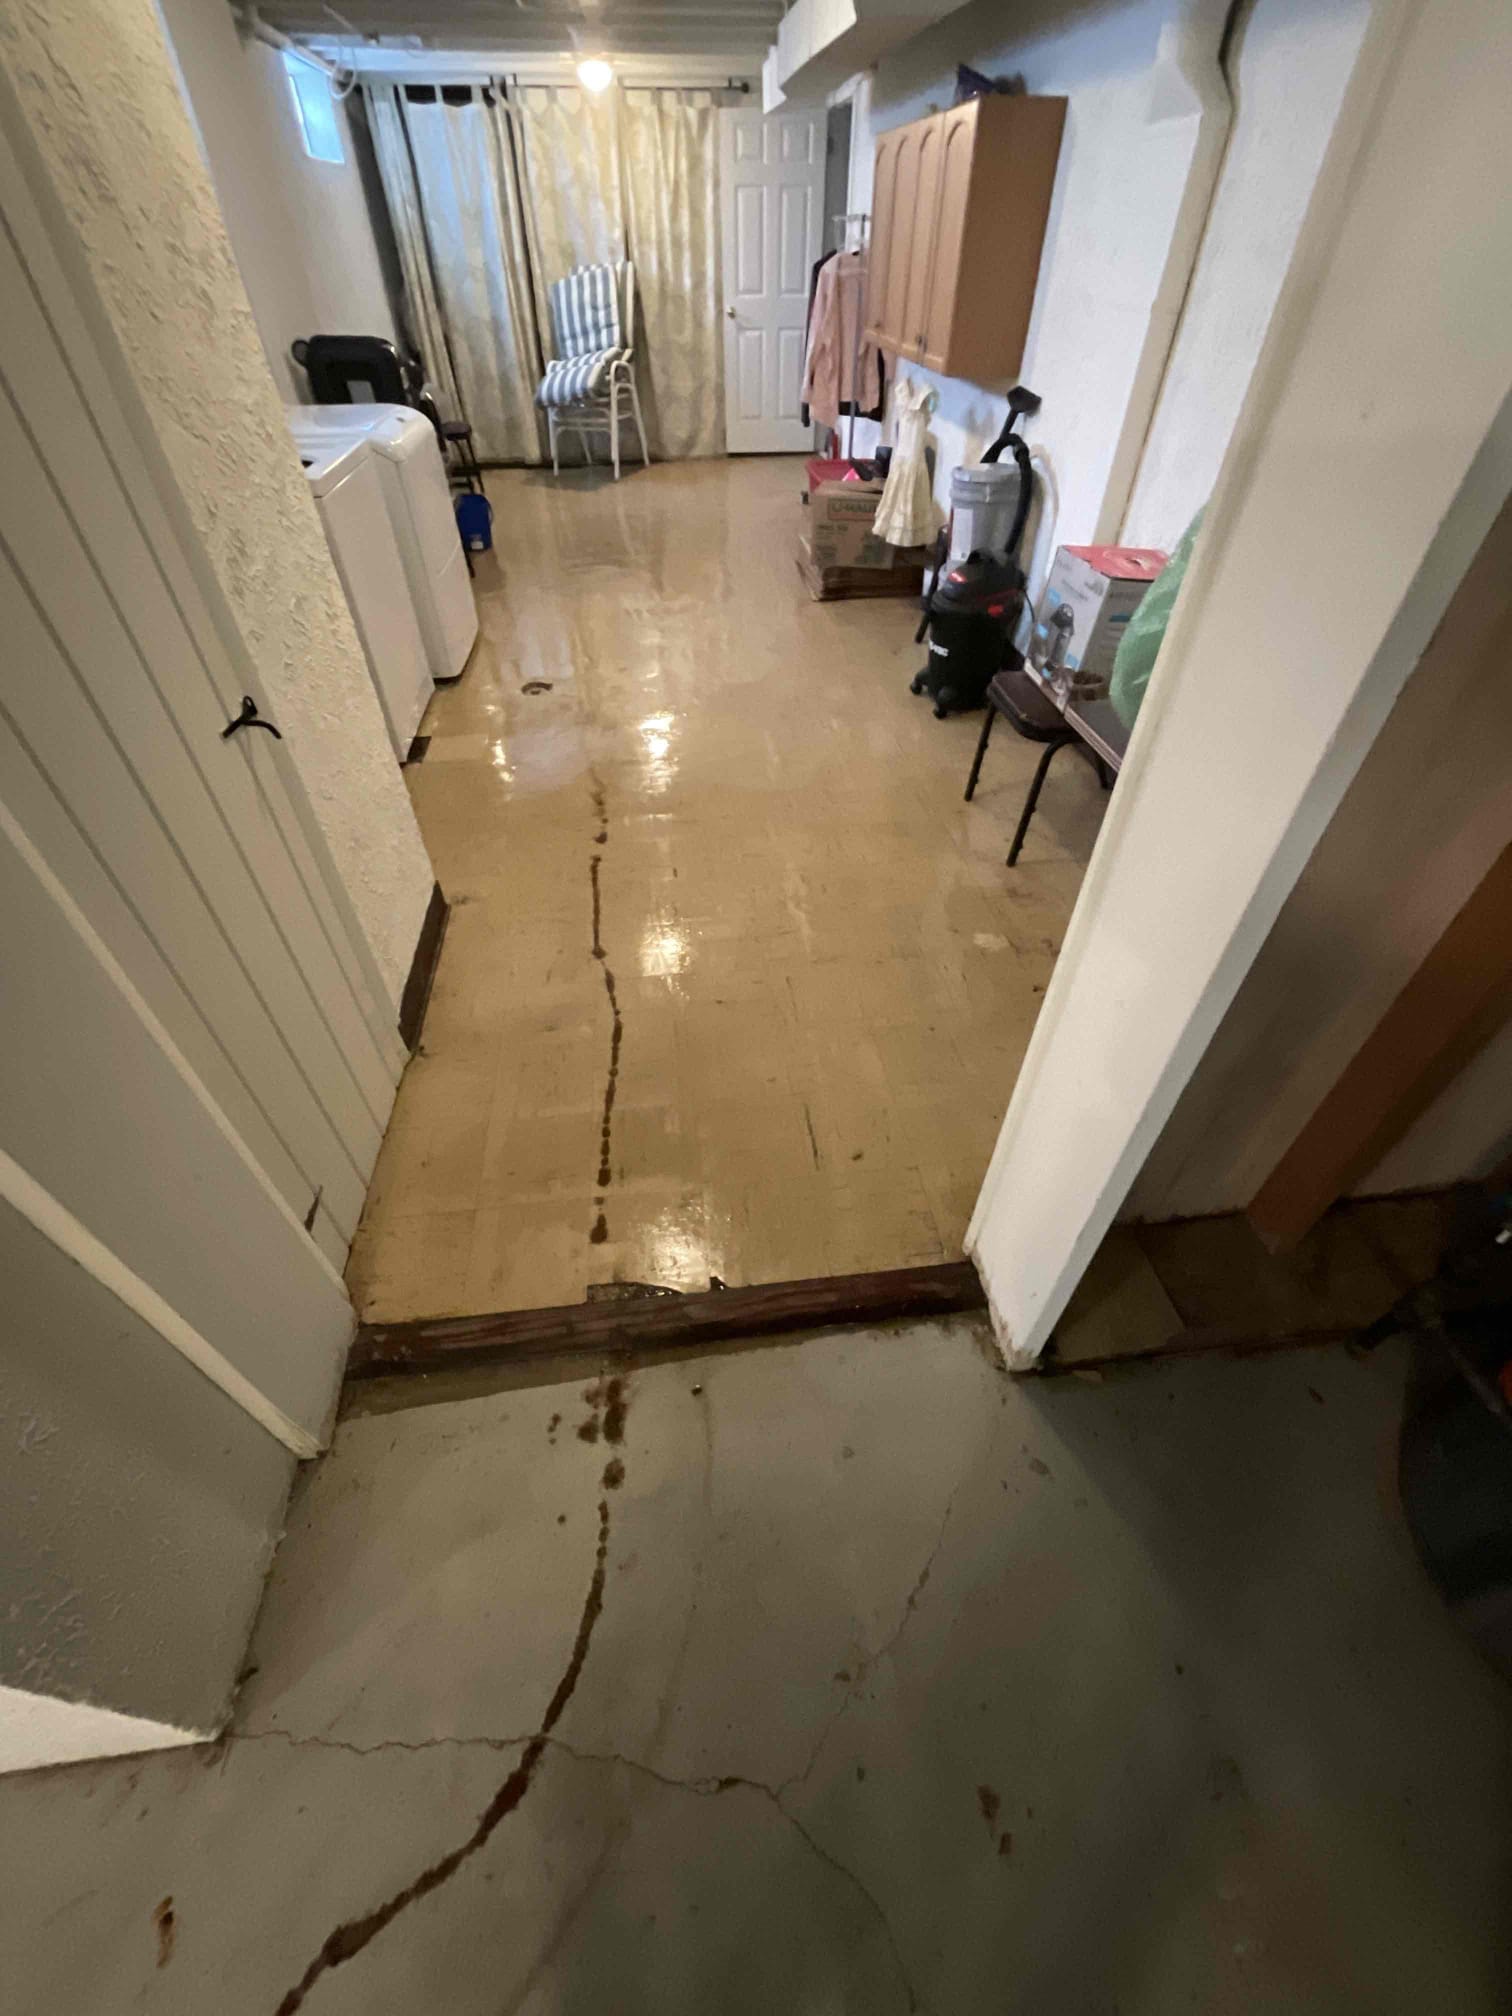 Wet floor due to sewage backup 